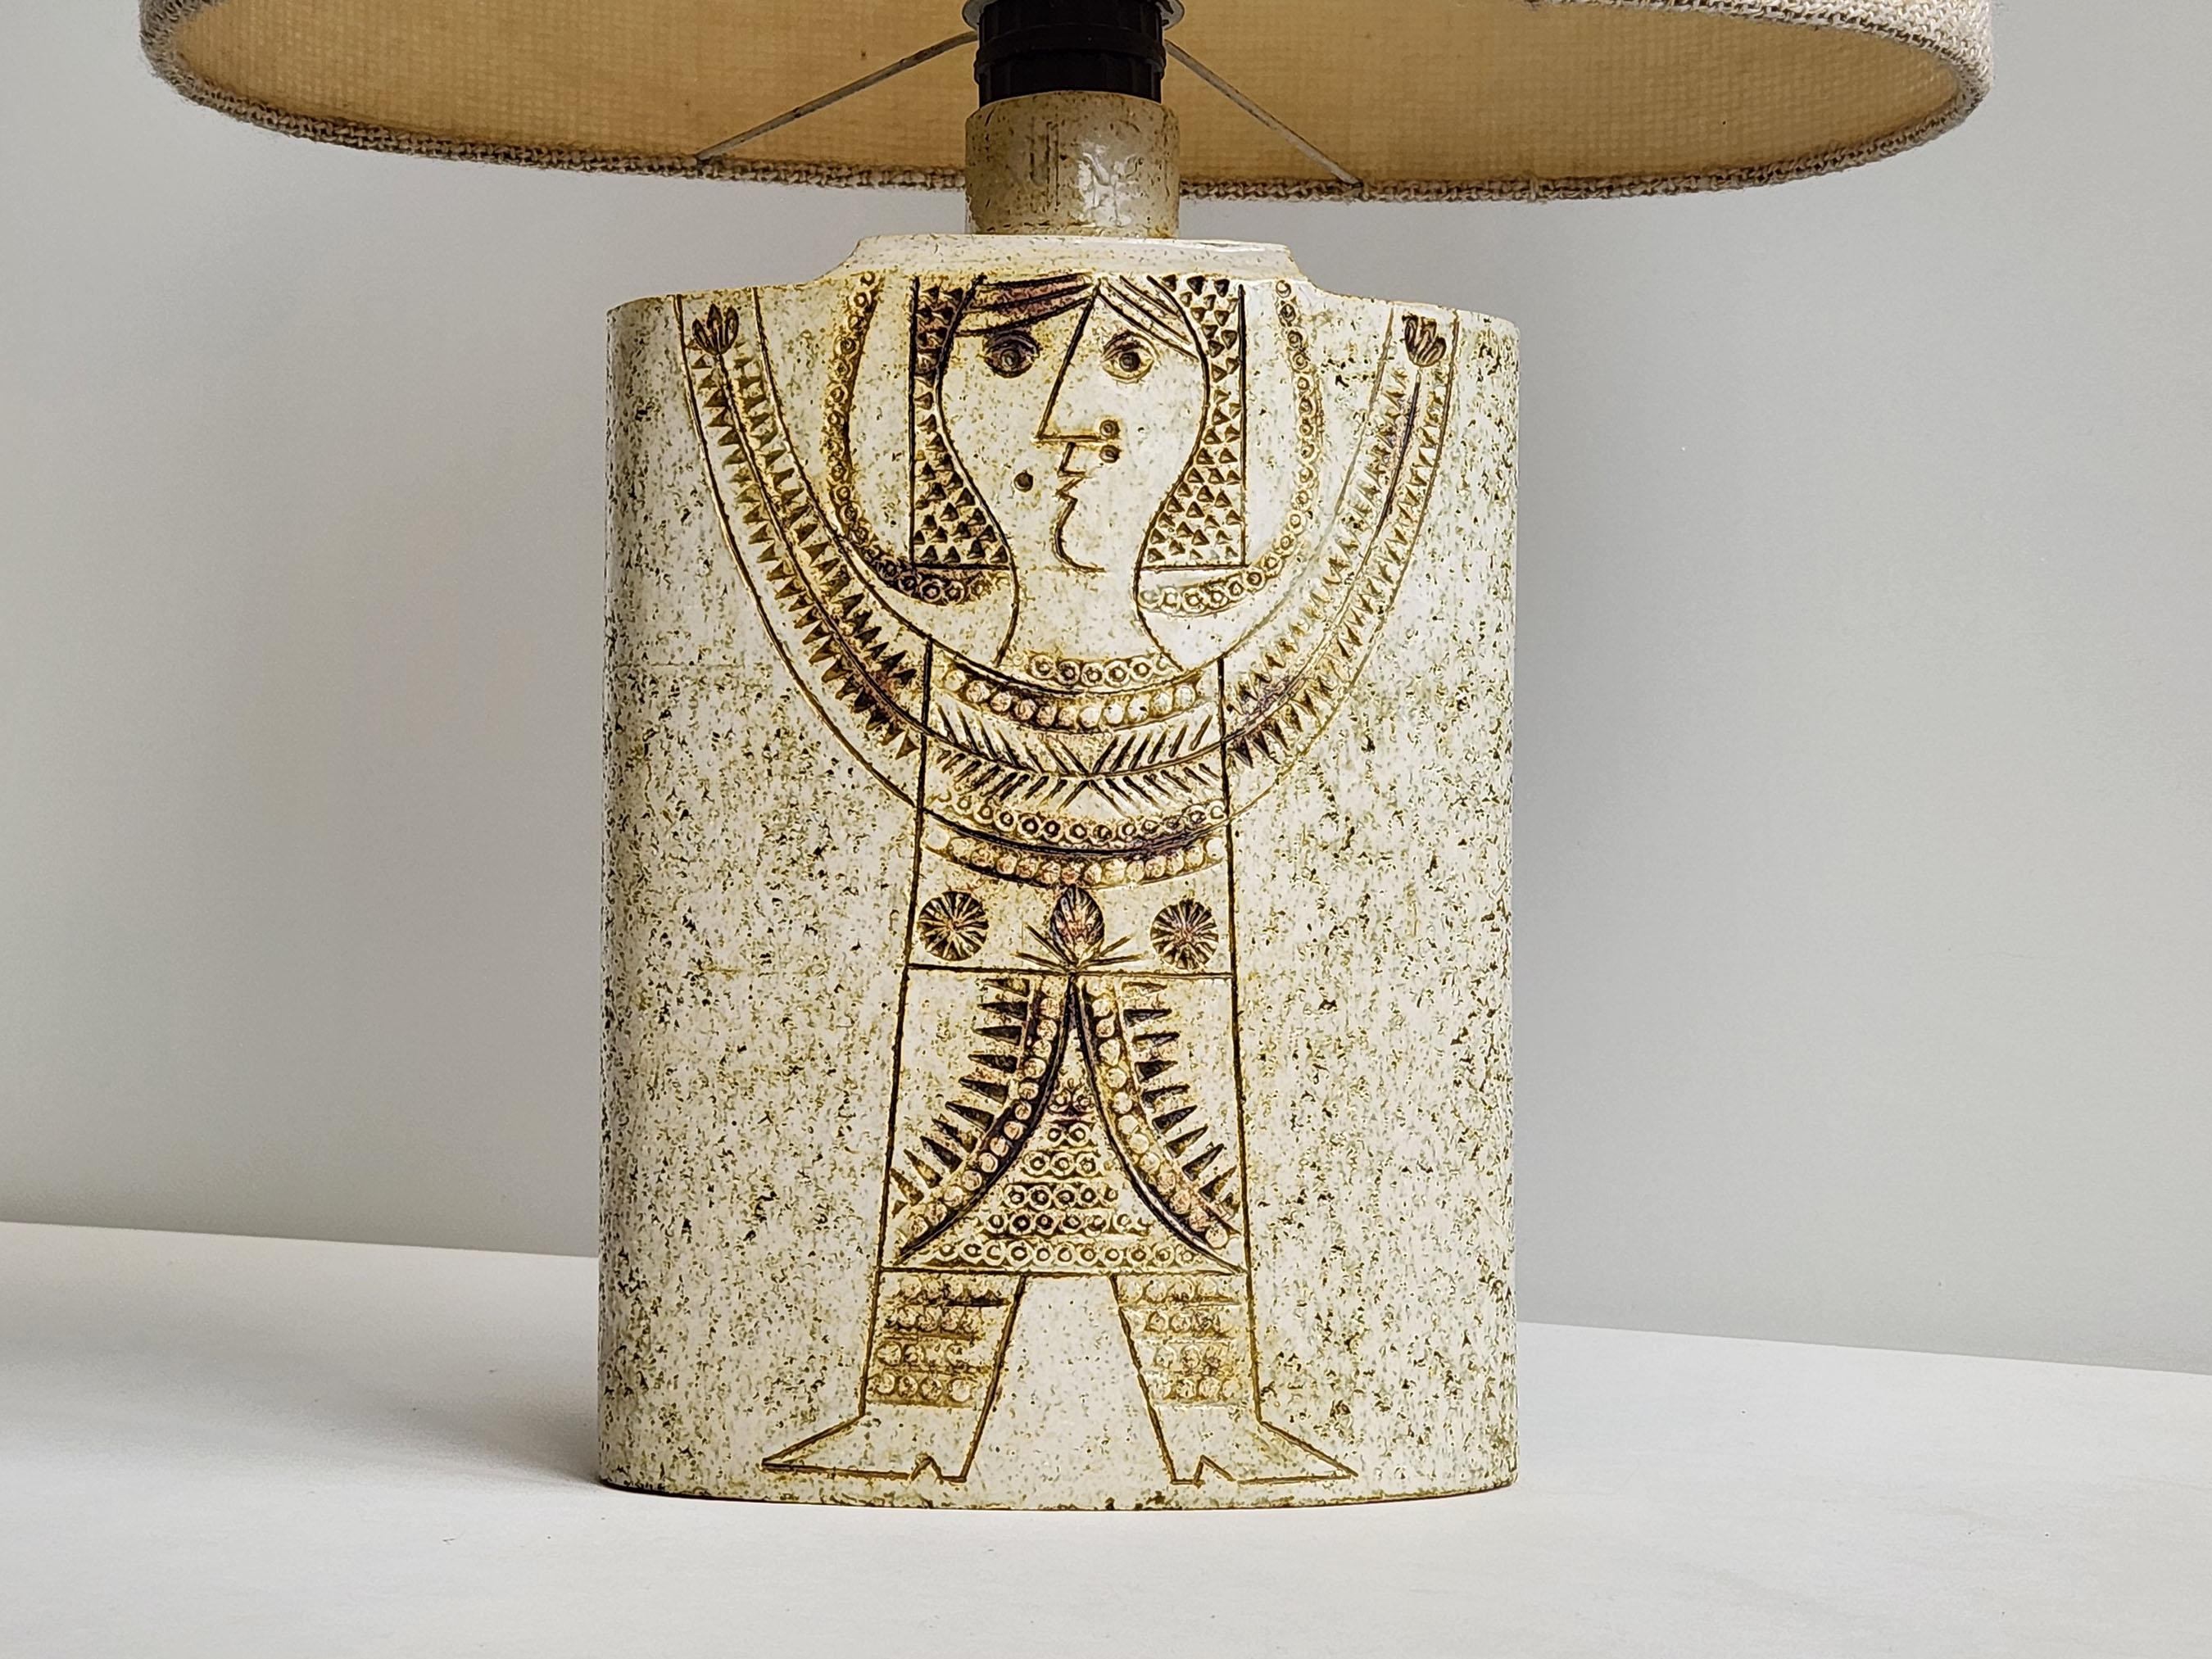 Carved 'sun goddess' design hand-glazed in cream and moss by master ceramist Roger Capron.